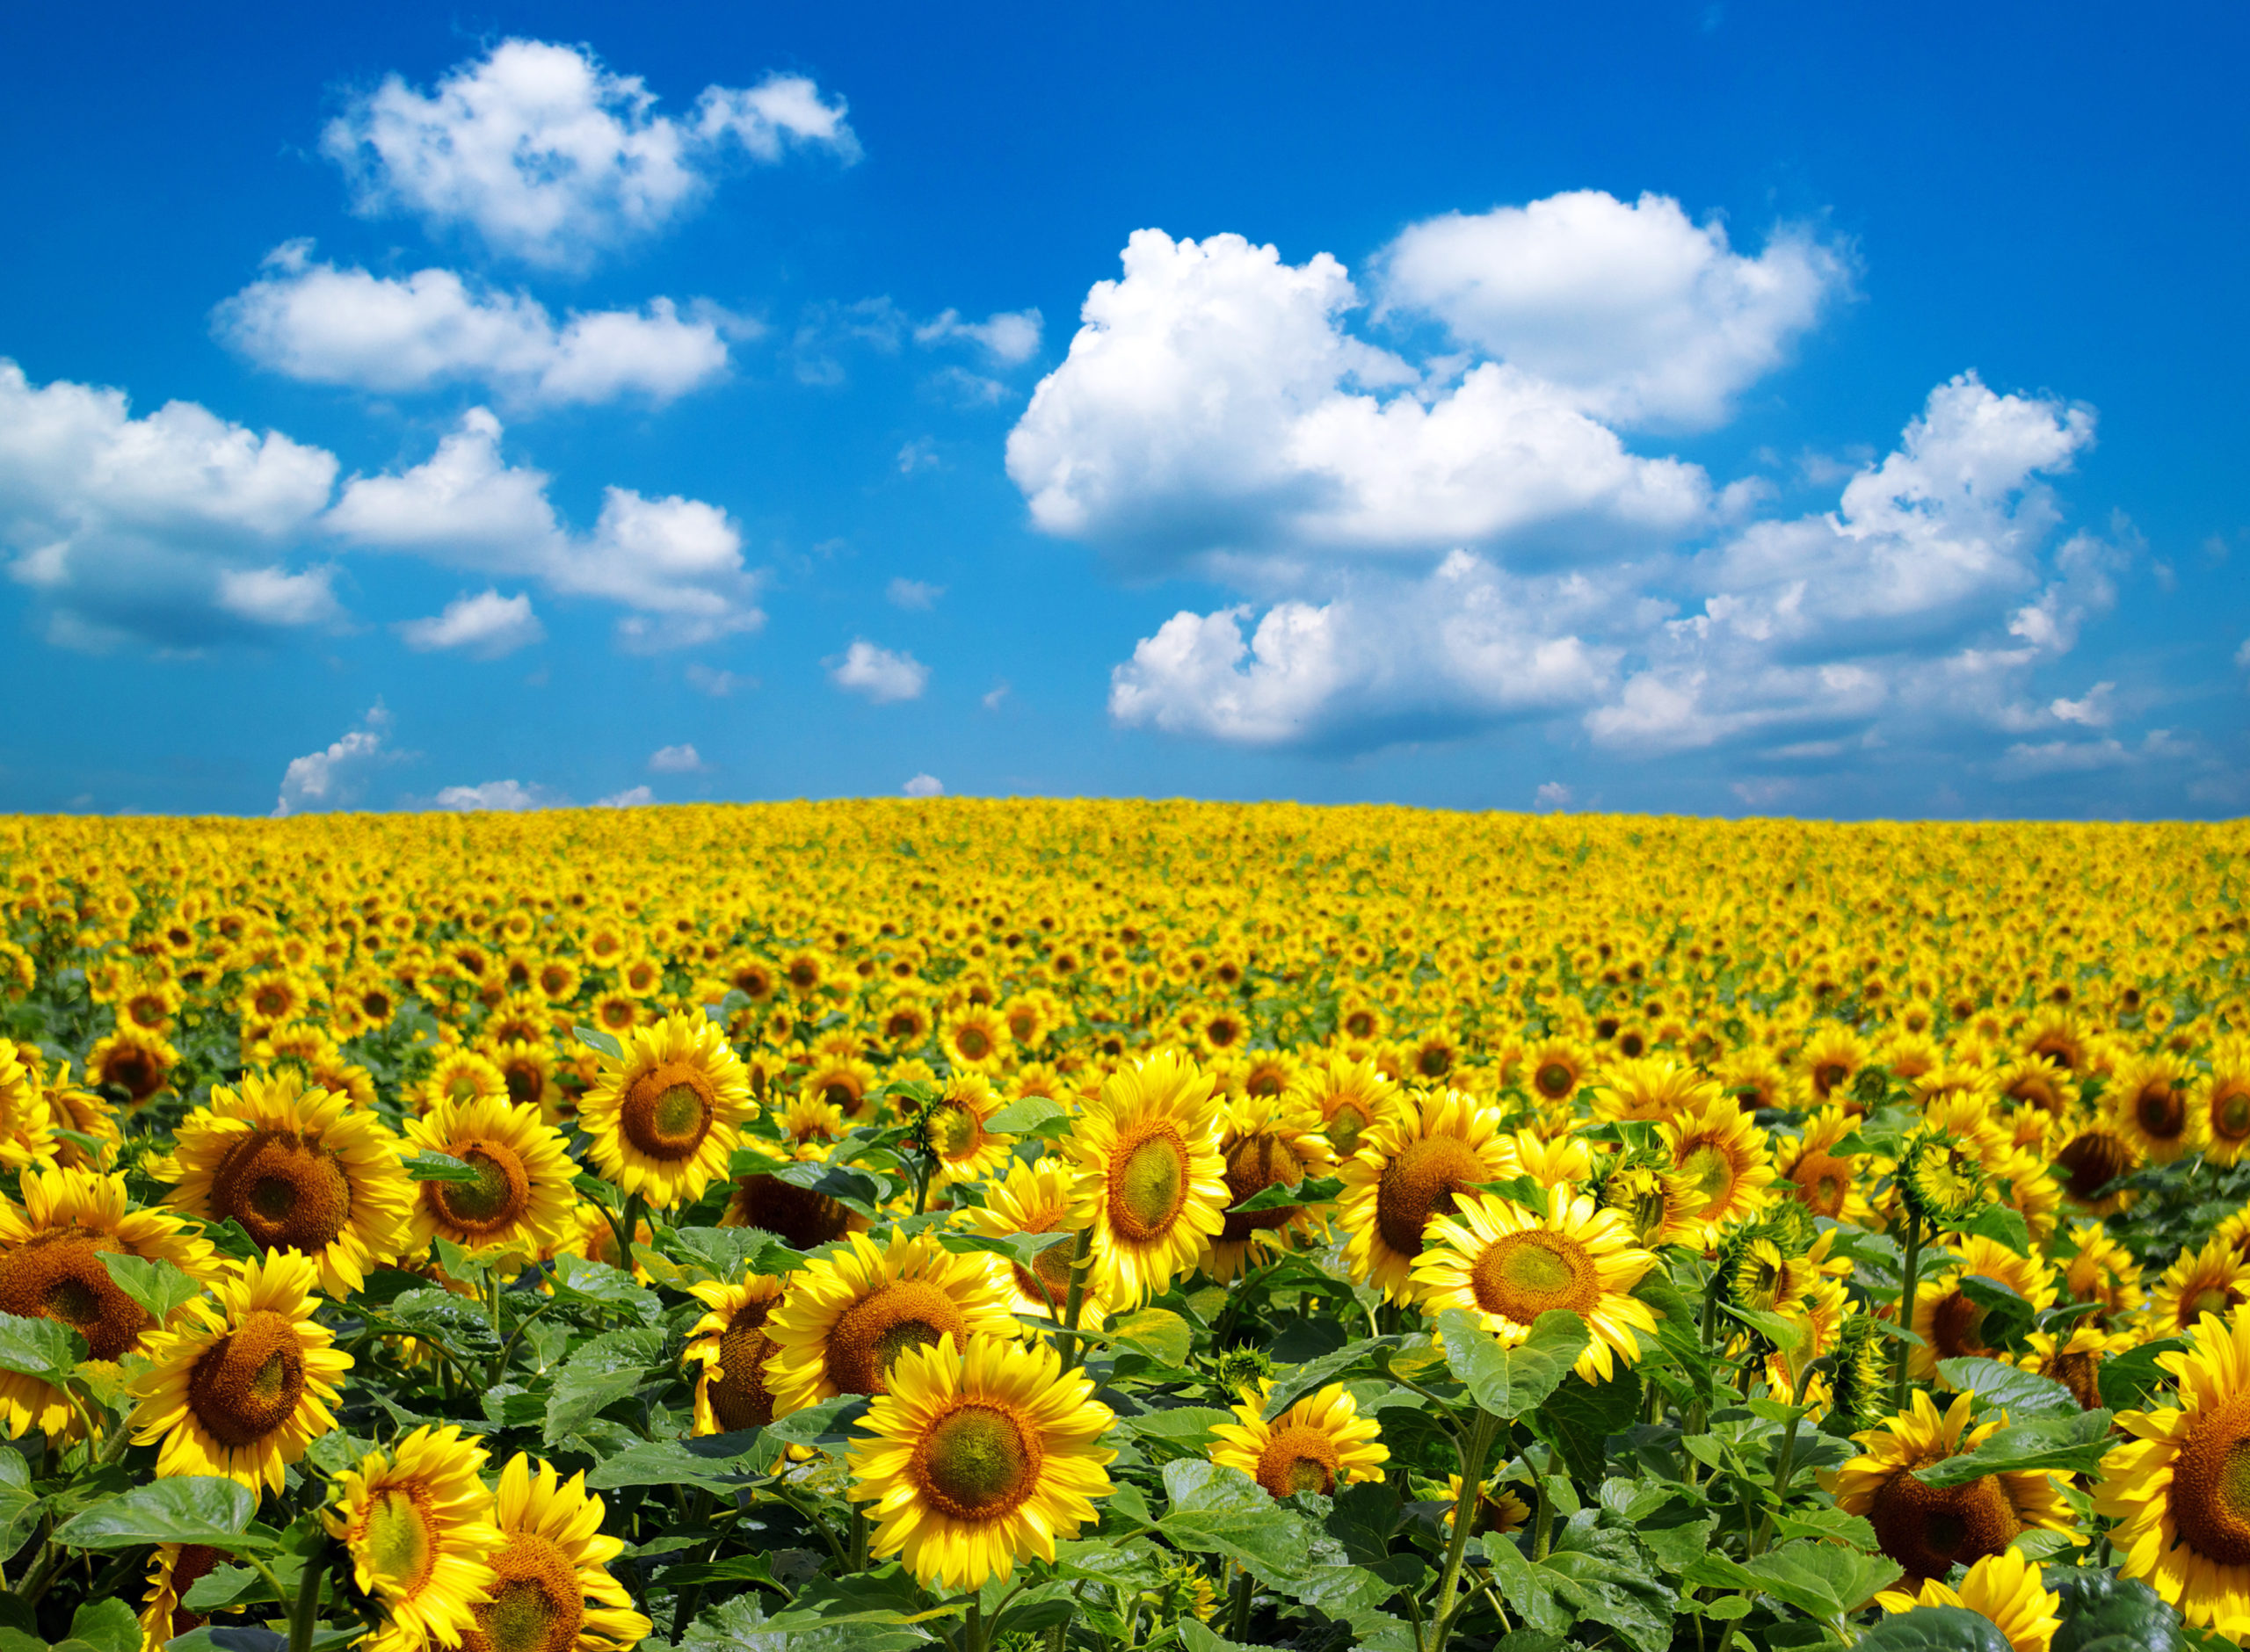 Ukraine sunflowers